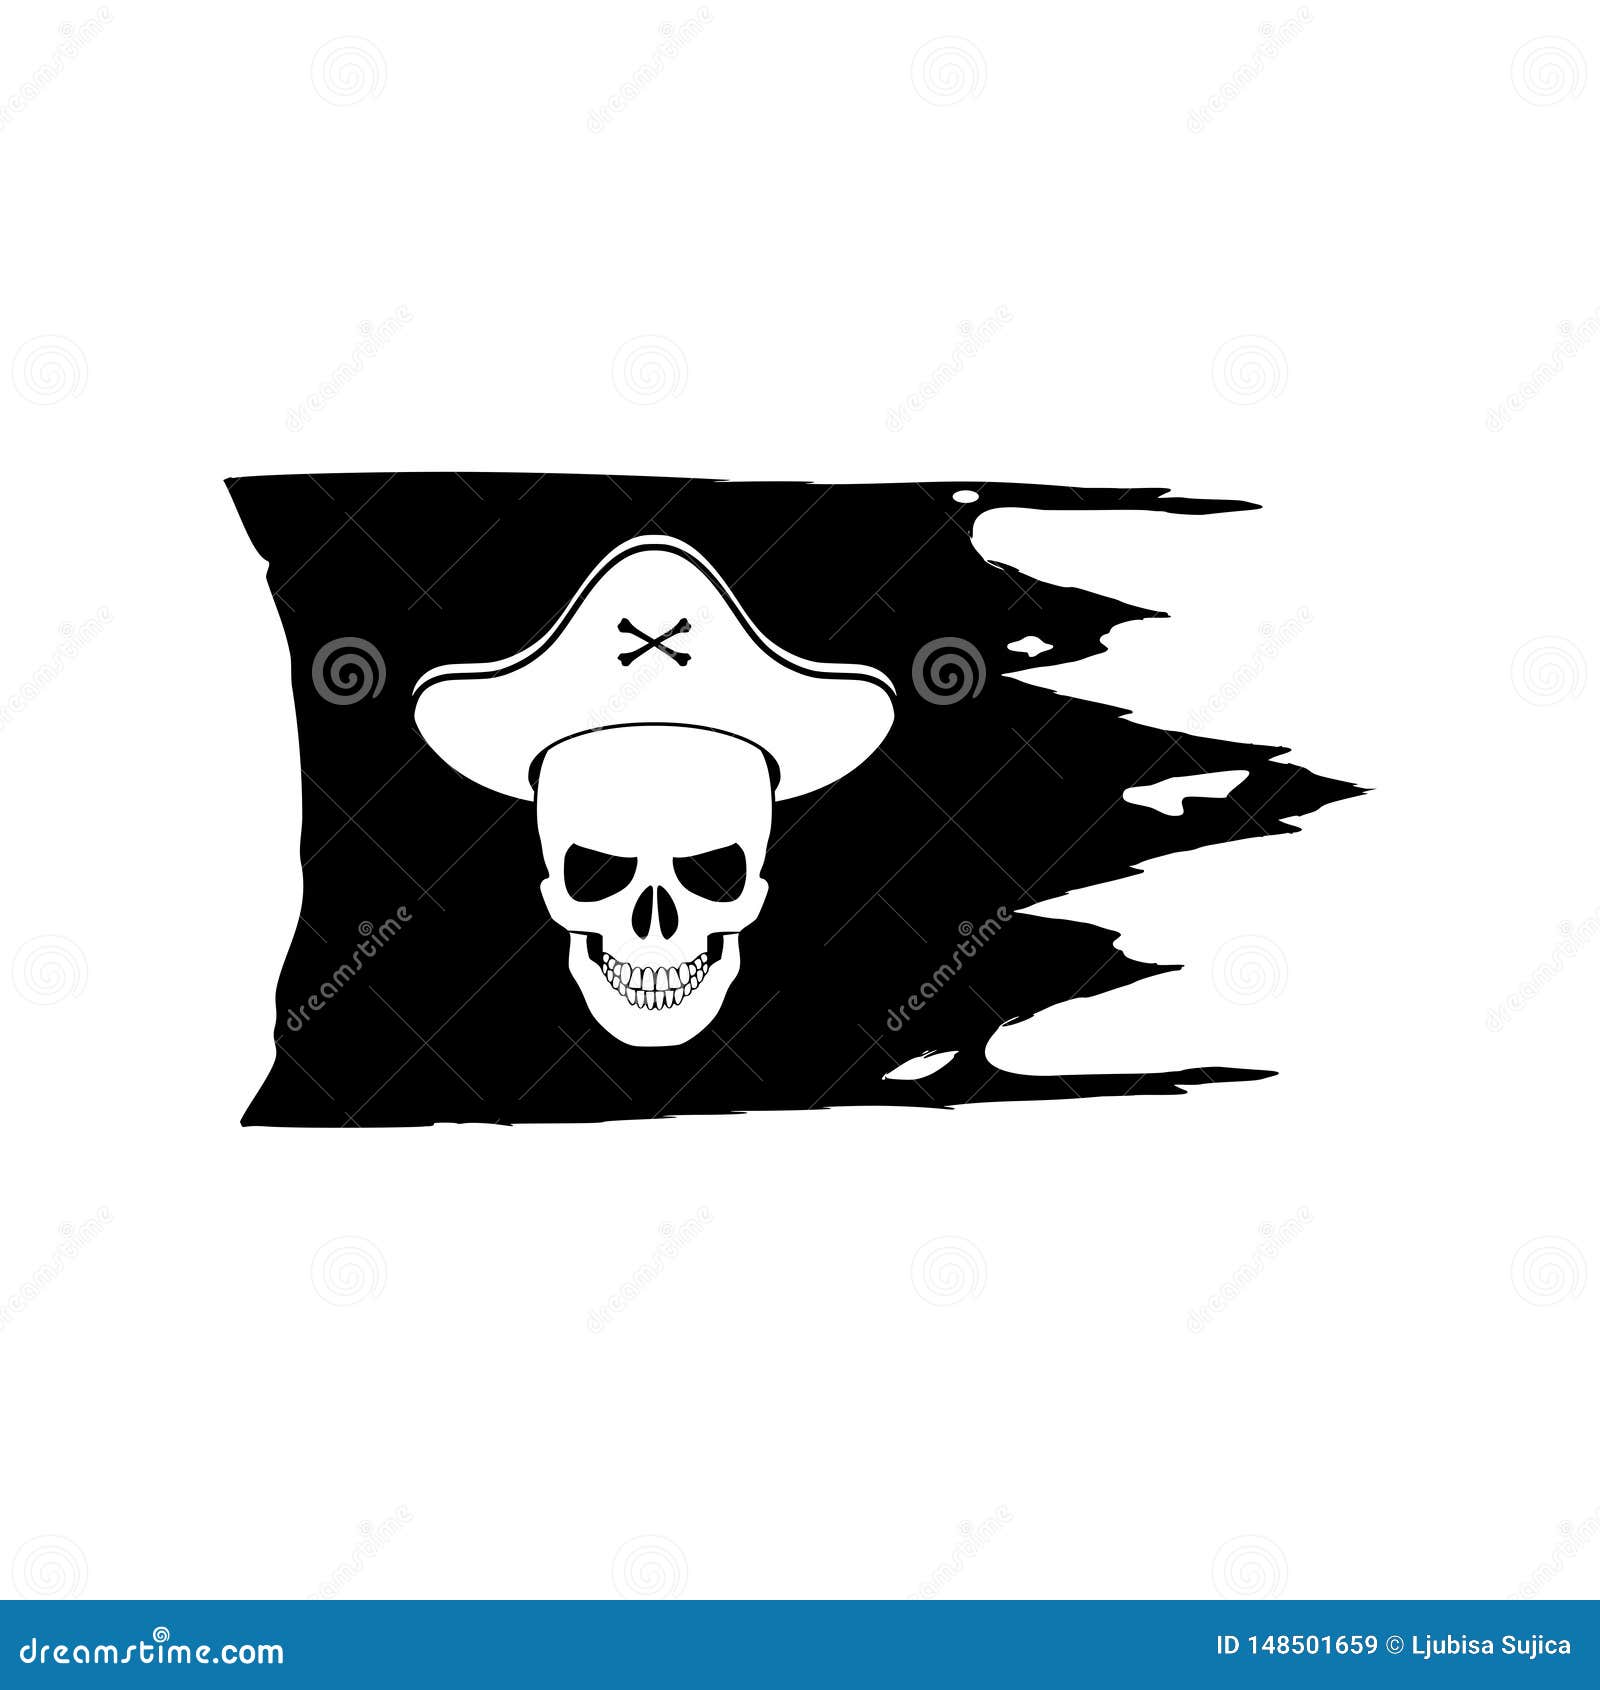 pirate skull flag simpleimage